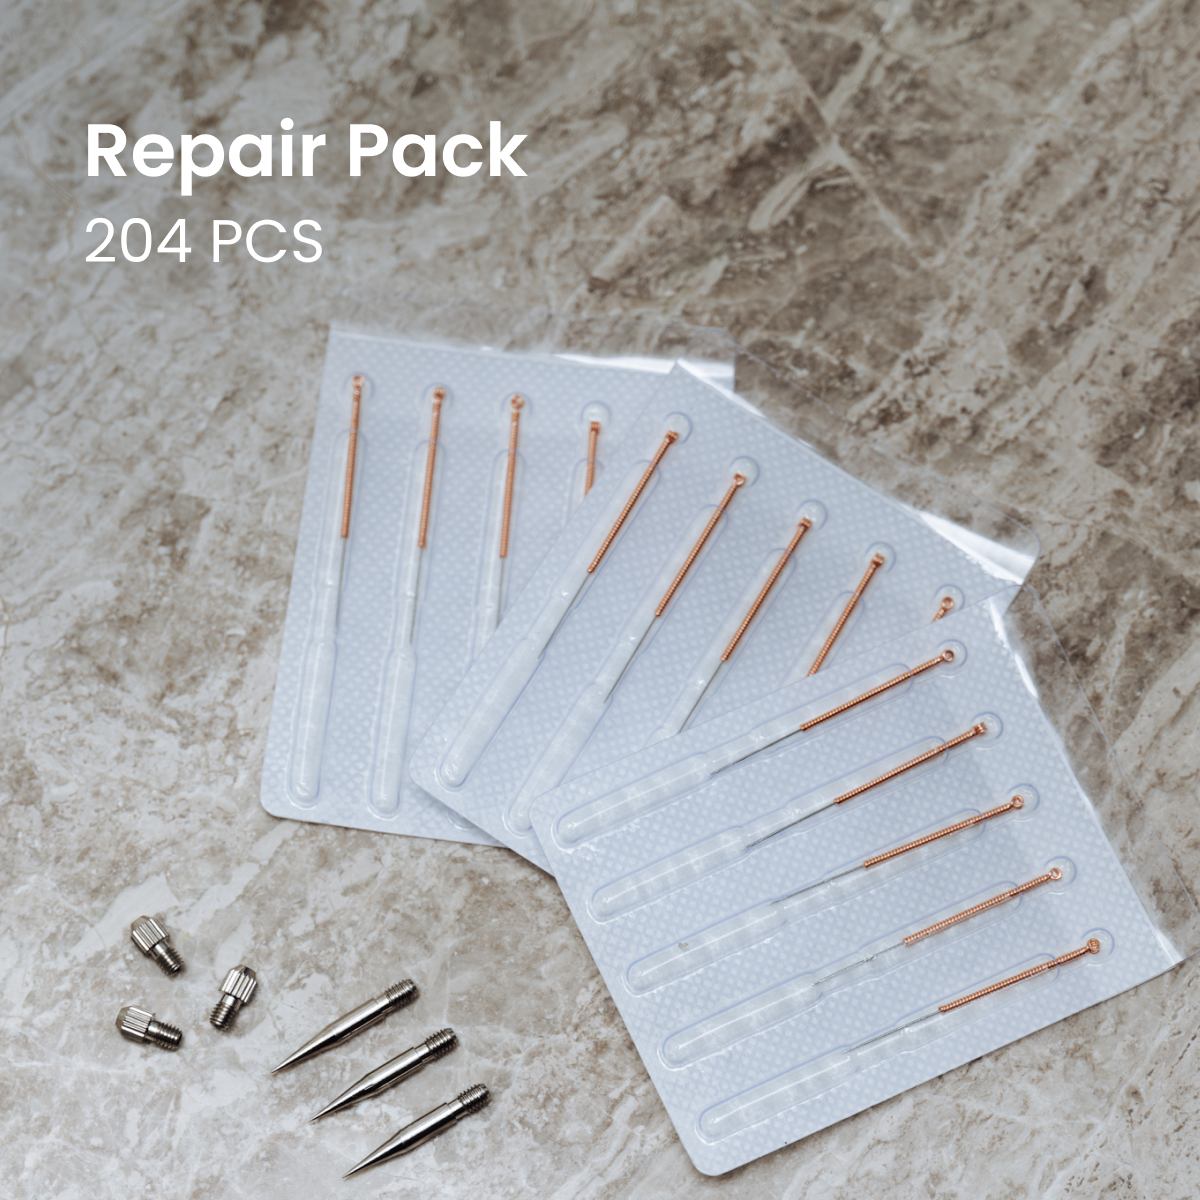 Bundle-Angebot: Beauty Spa Kit (5x) + Reparaturpaket (204 Stück) + kostenloses Ratgeberbuch